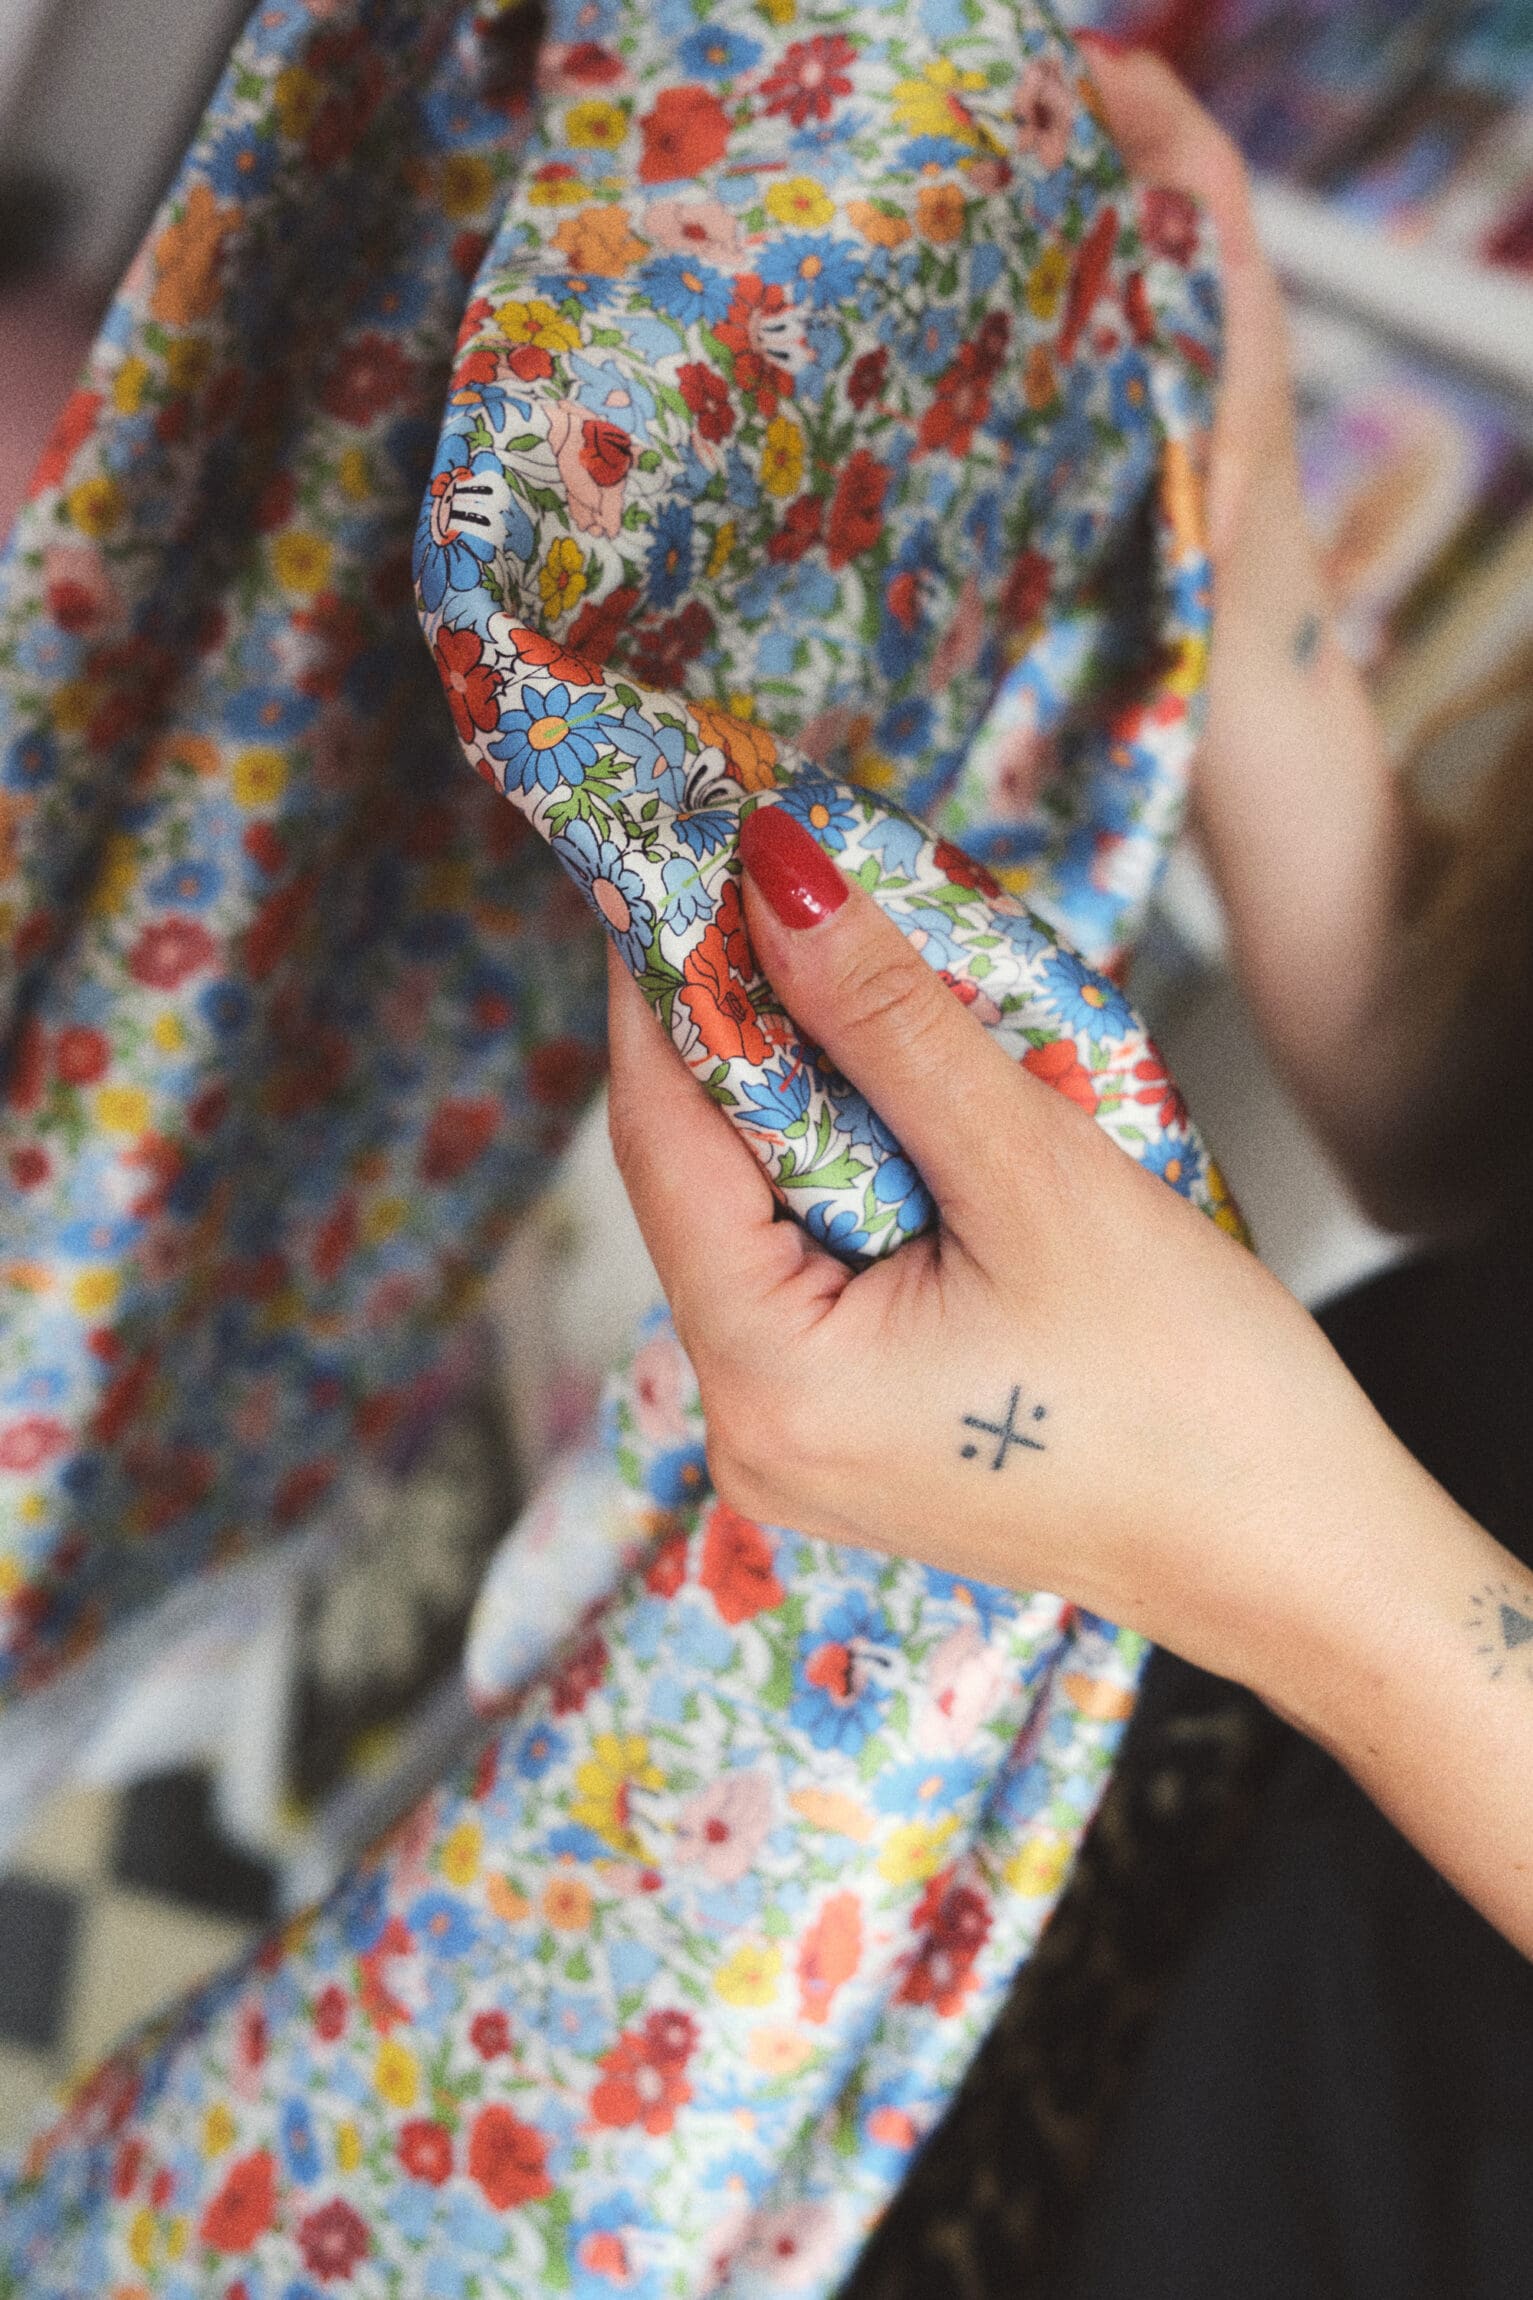 Hattie Stewart's Liberty fabric, featuring cartoon-like characters amongst the flowers